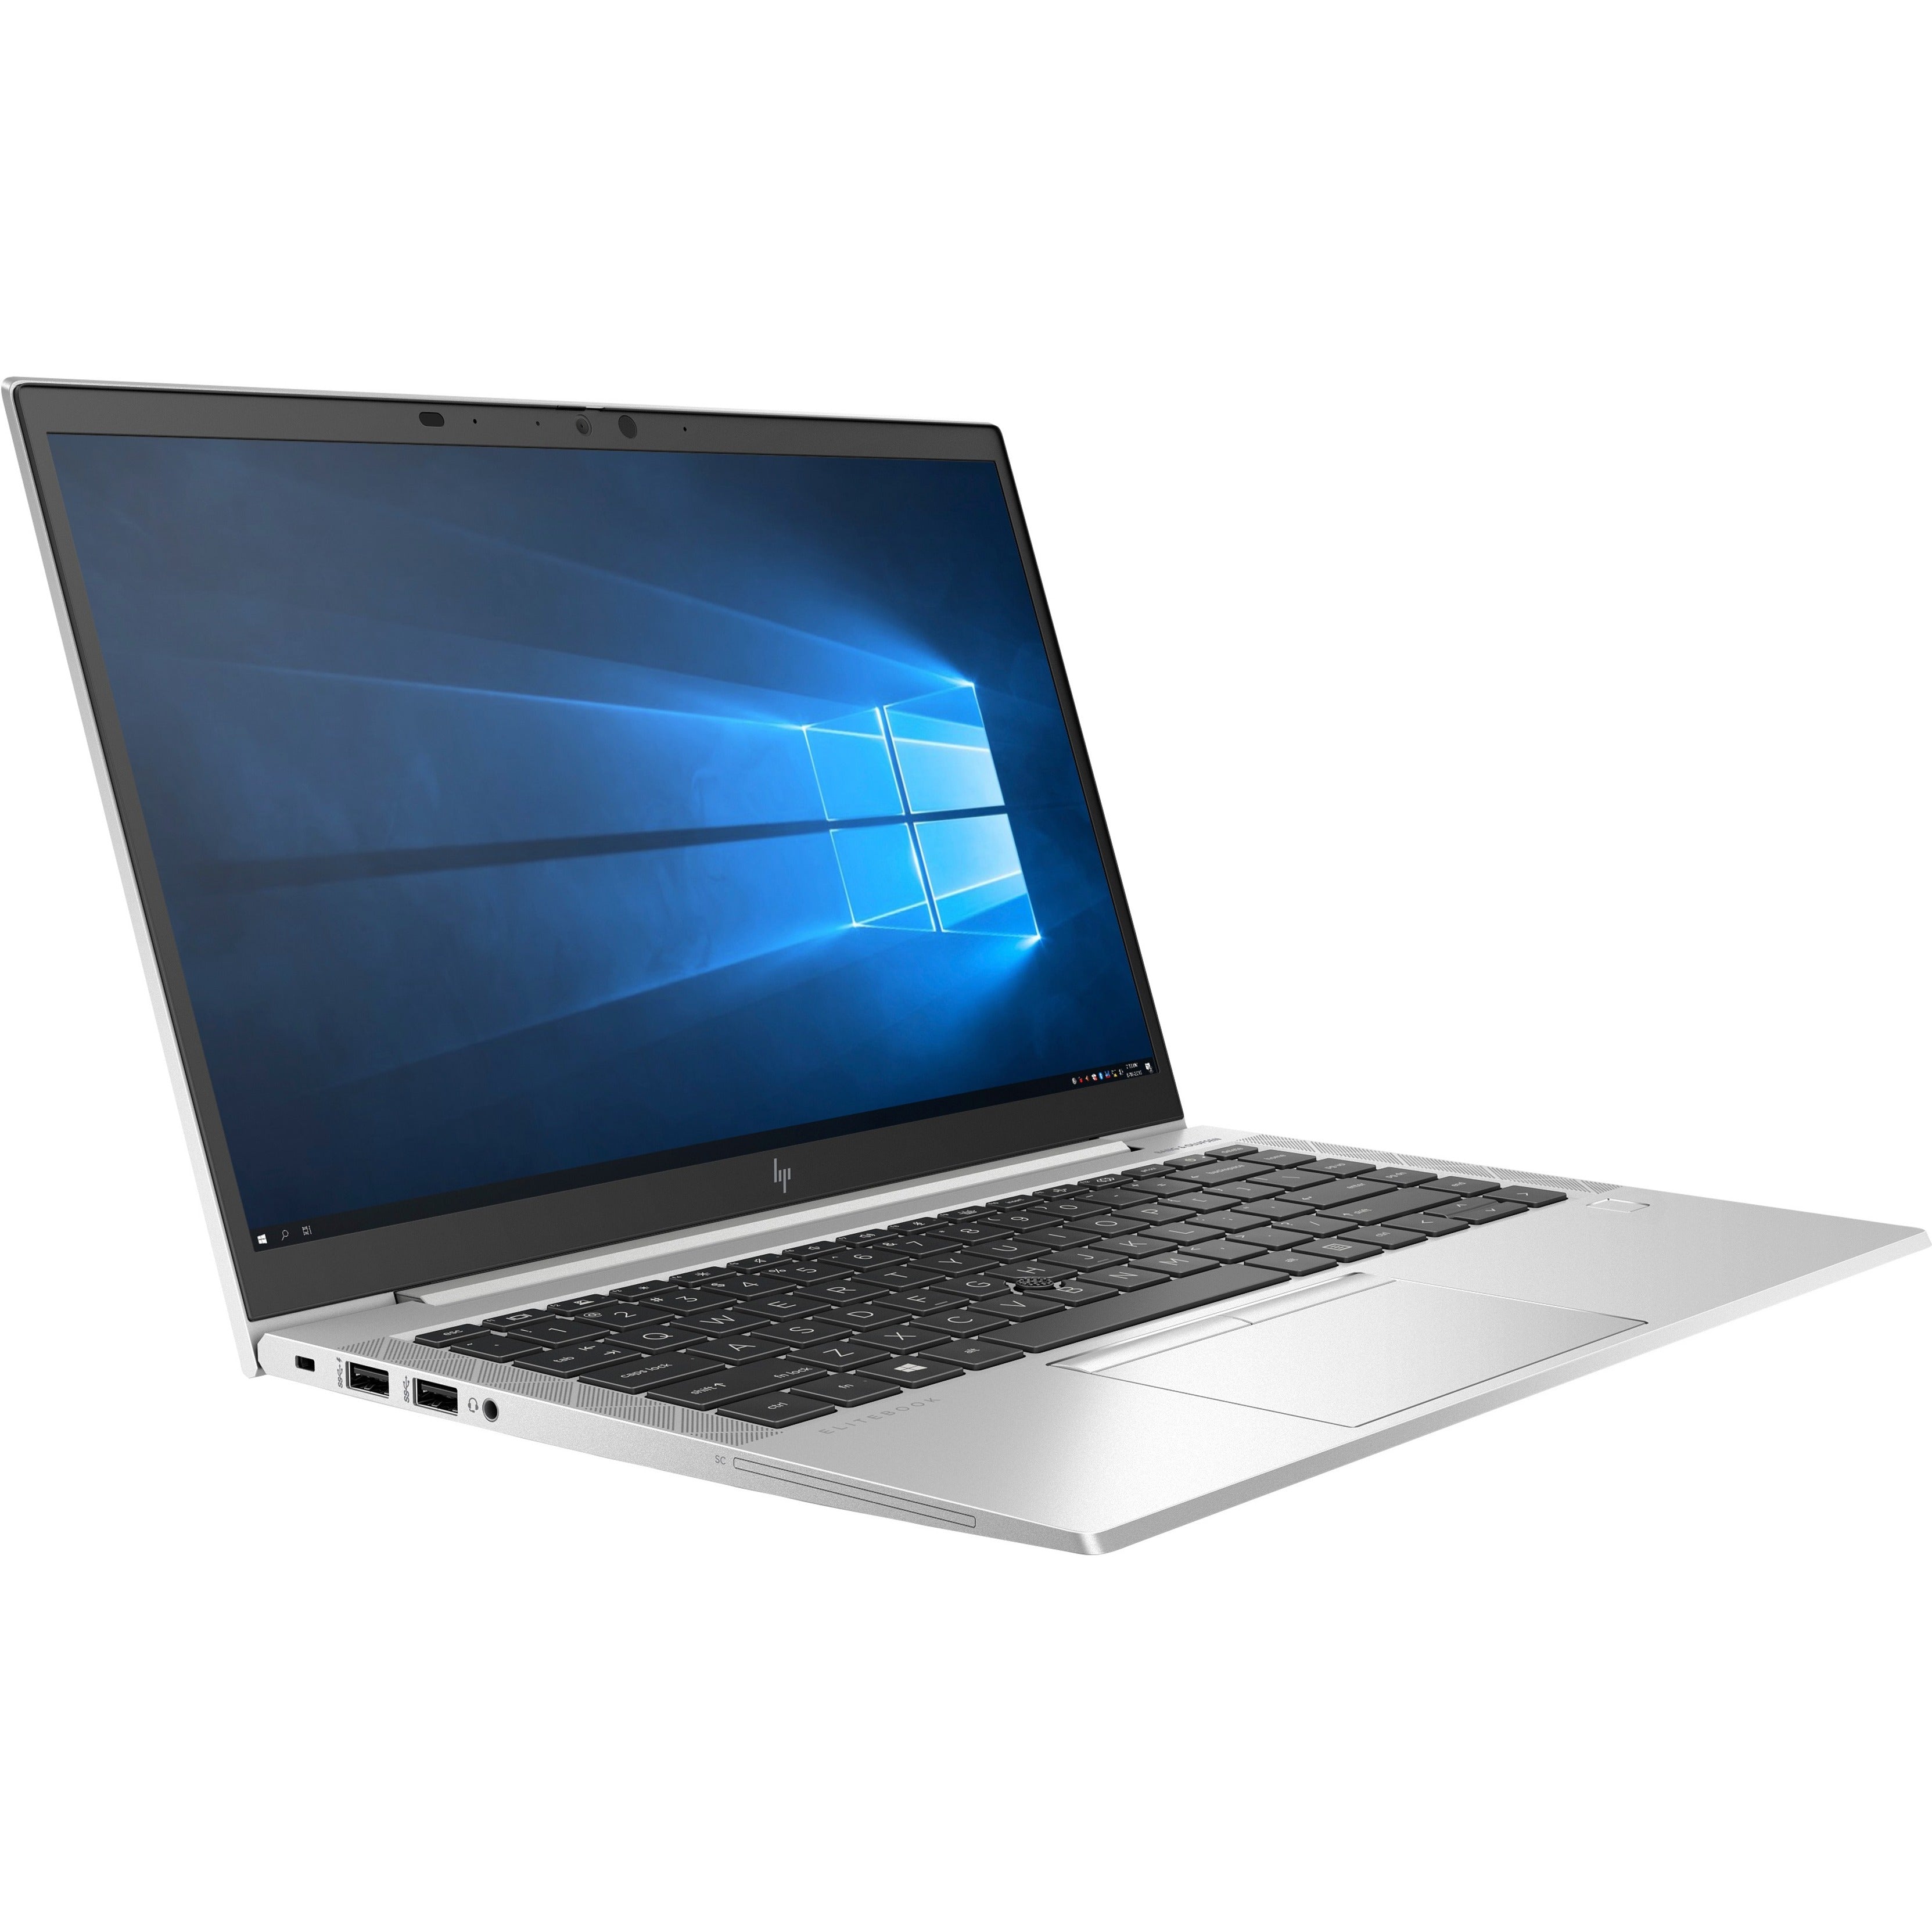 HP mt46 Mobile Thin Client Notebook, Full HD, Ryzen 3 PRO 4450U, 8GB RAM, 128GB SSD